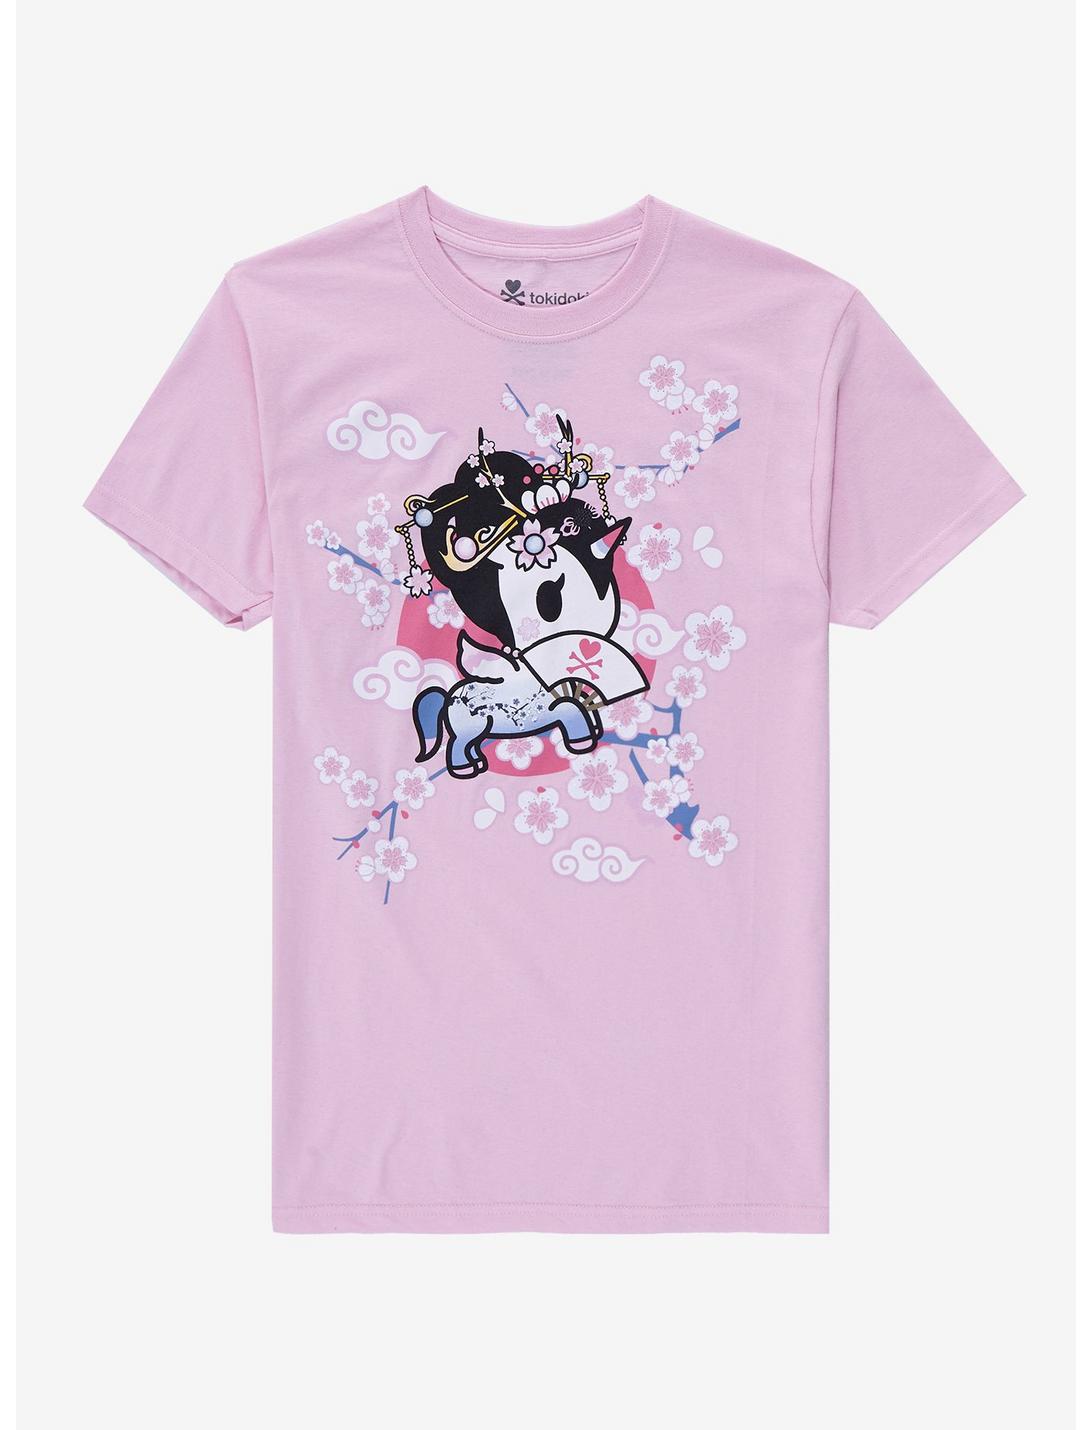 Tokidoki Yoshino Unicorno Boyfriend Fit Girls T-Shirt, MULTI, hi-res